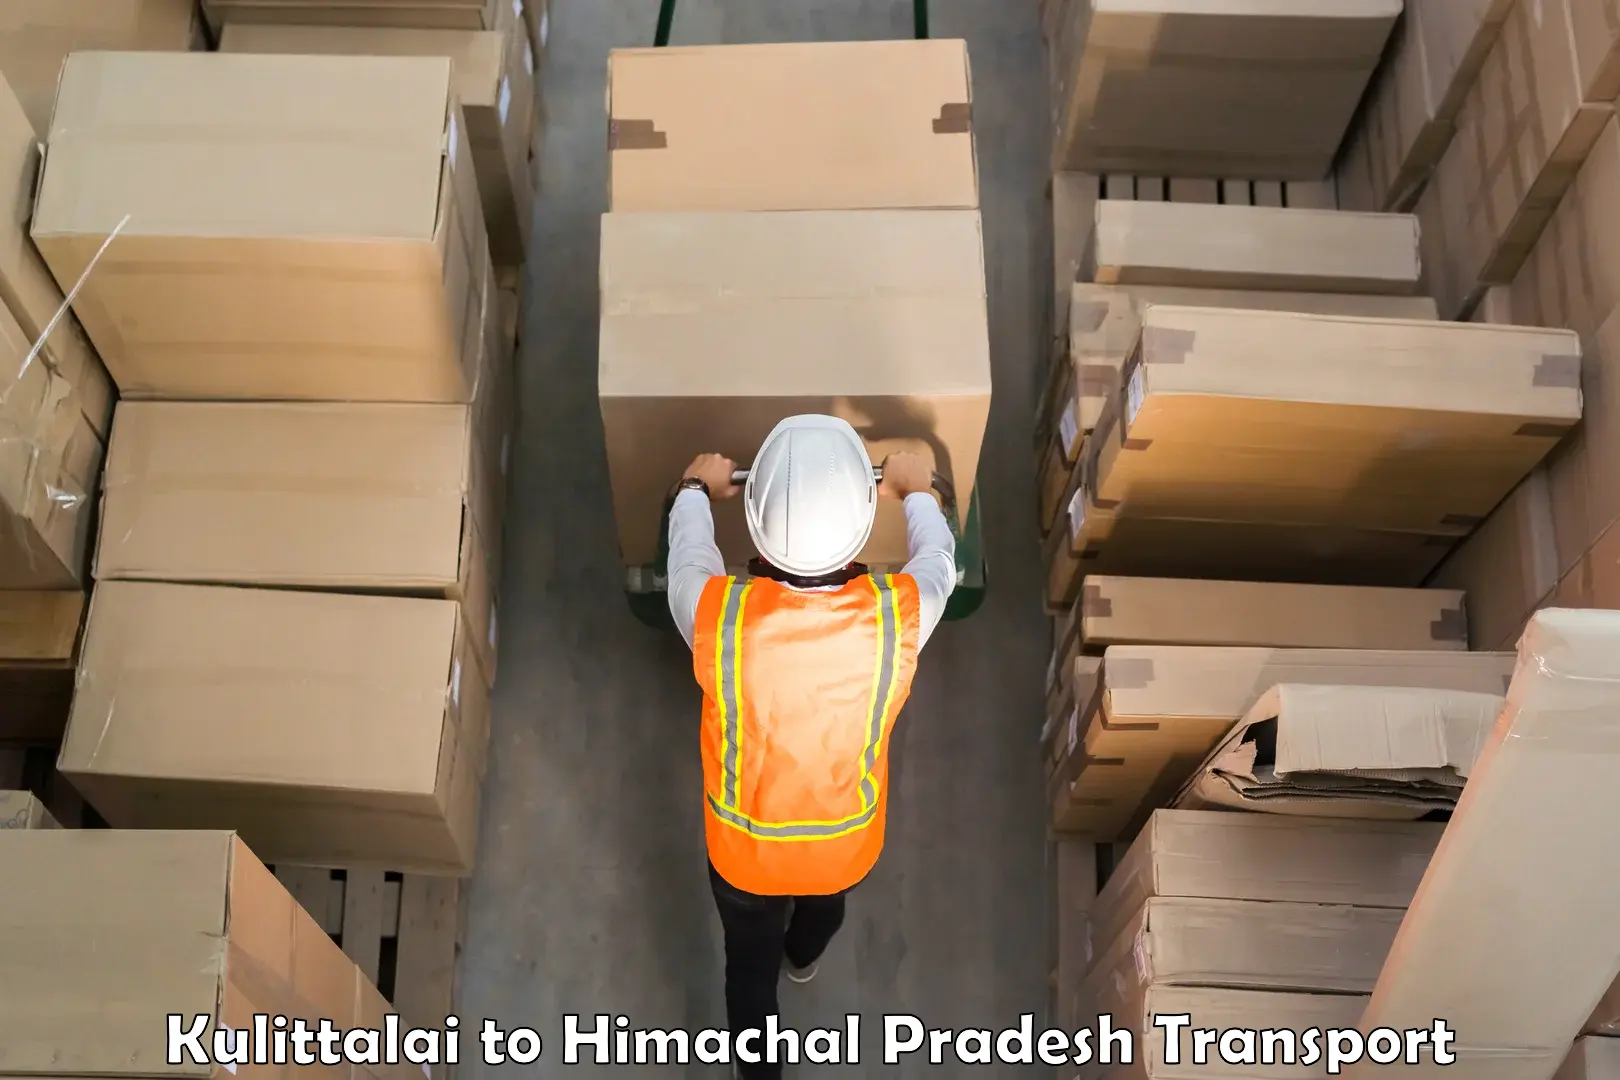 Truck transport companies in India Kulittalai to Ghumarwin